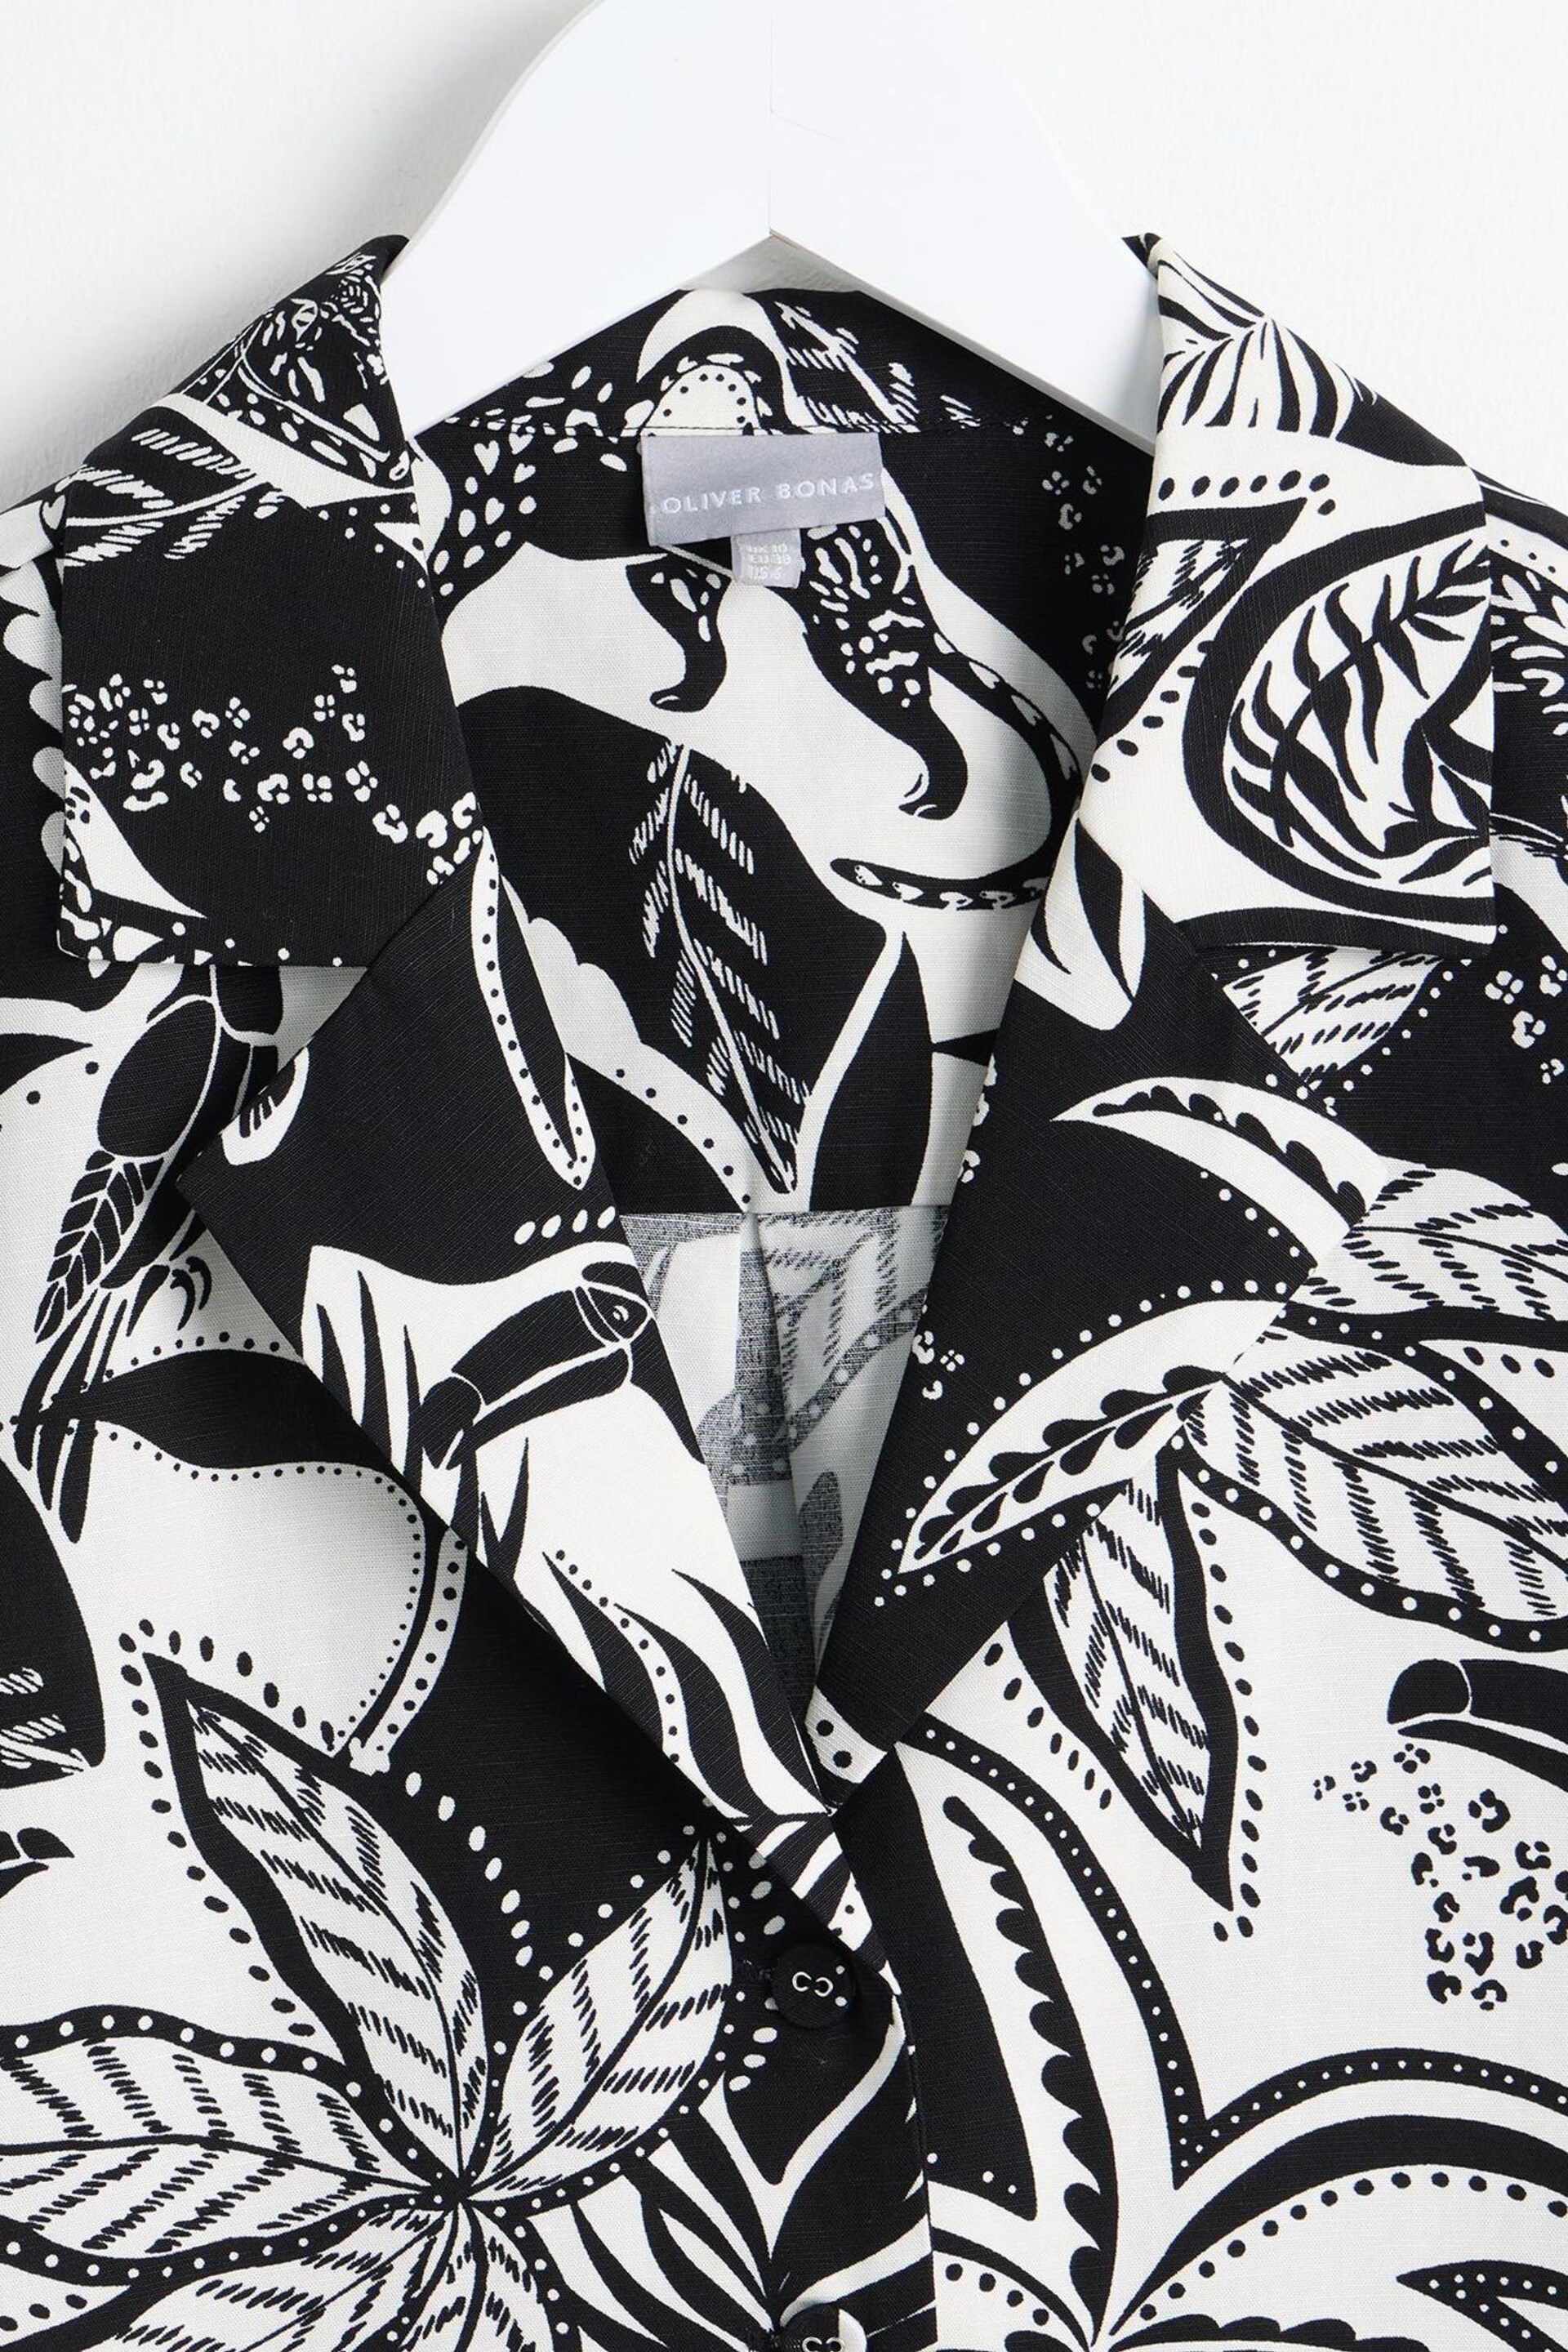 Oliver Bonas Black Tropical Print Shirt - Image 3 of 5